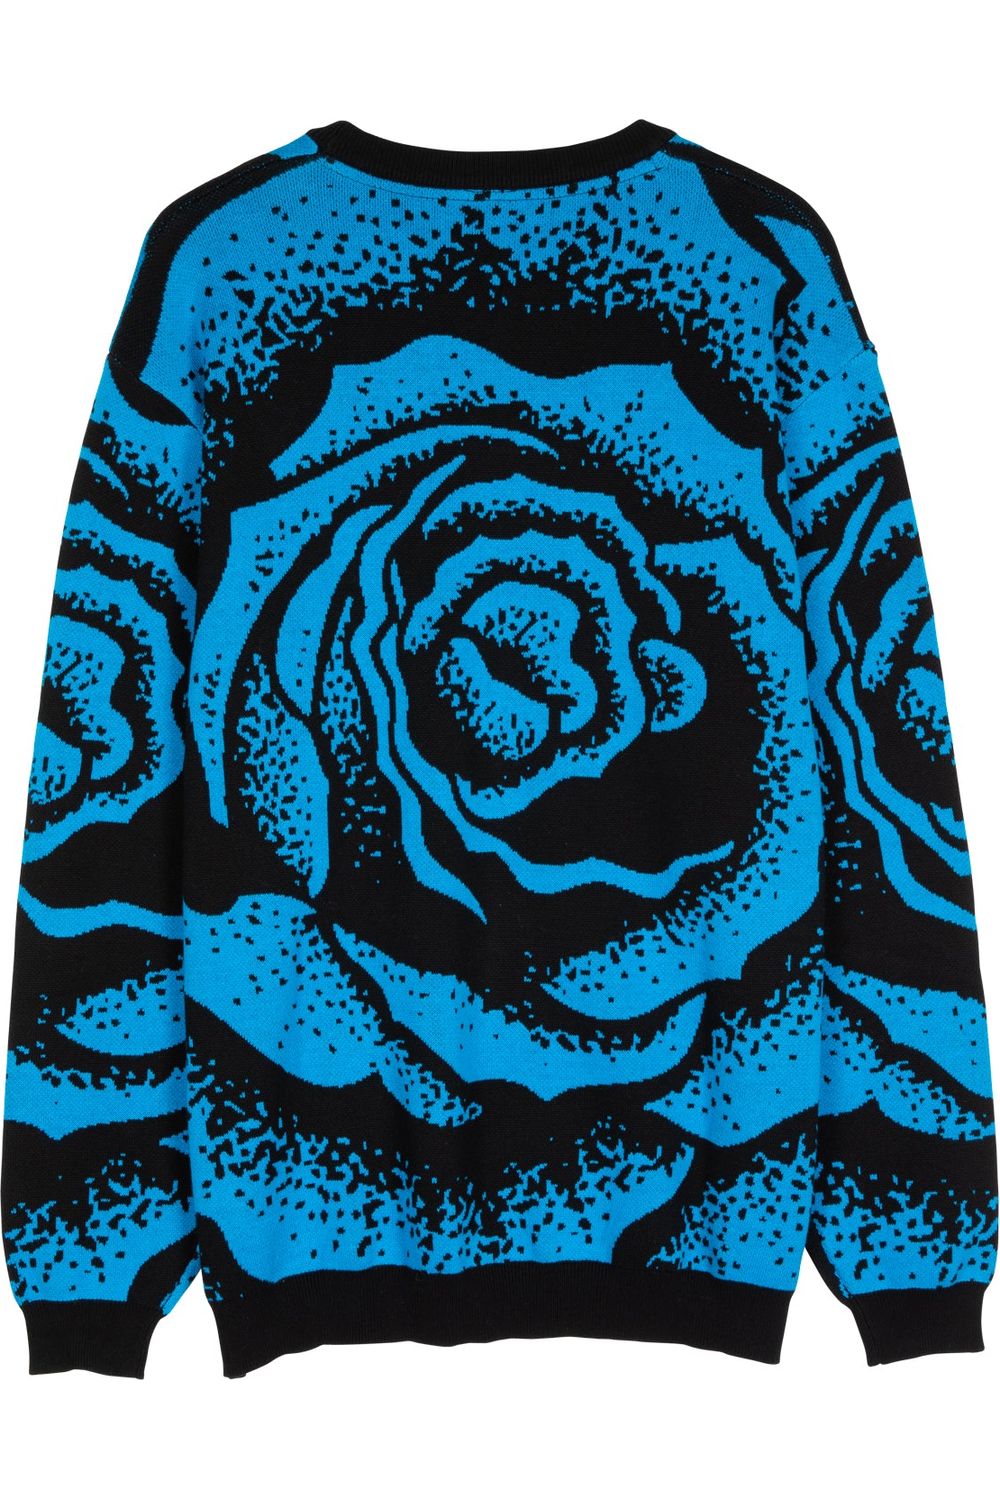 Santa Cruz Dressen Big Rose Knit Crew Black/Blue Rose